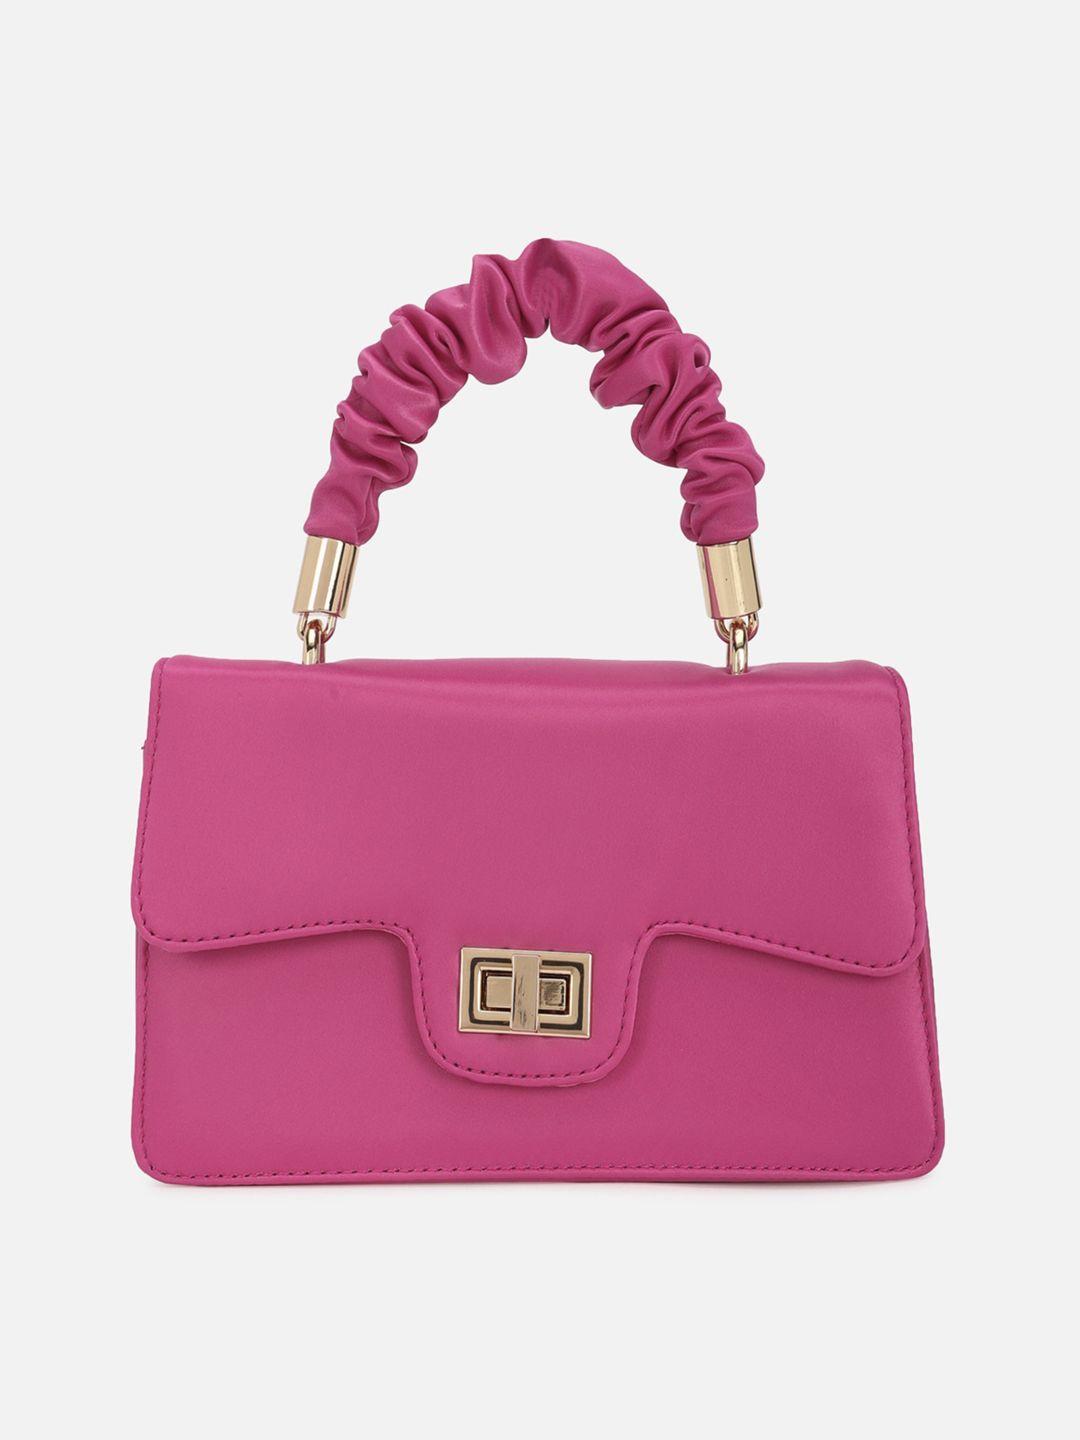 forever-21-pink-structured-satchel